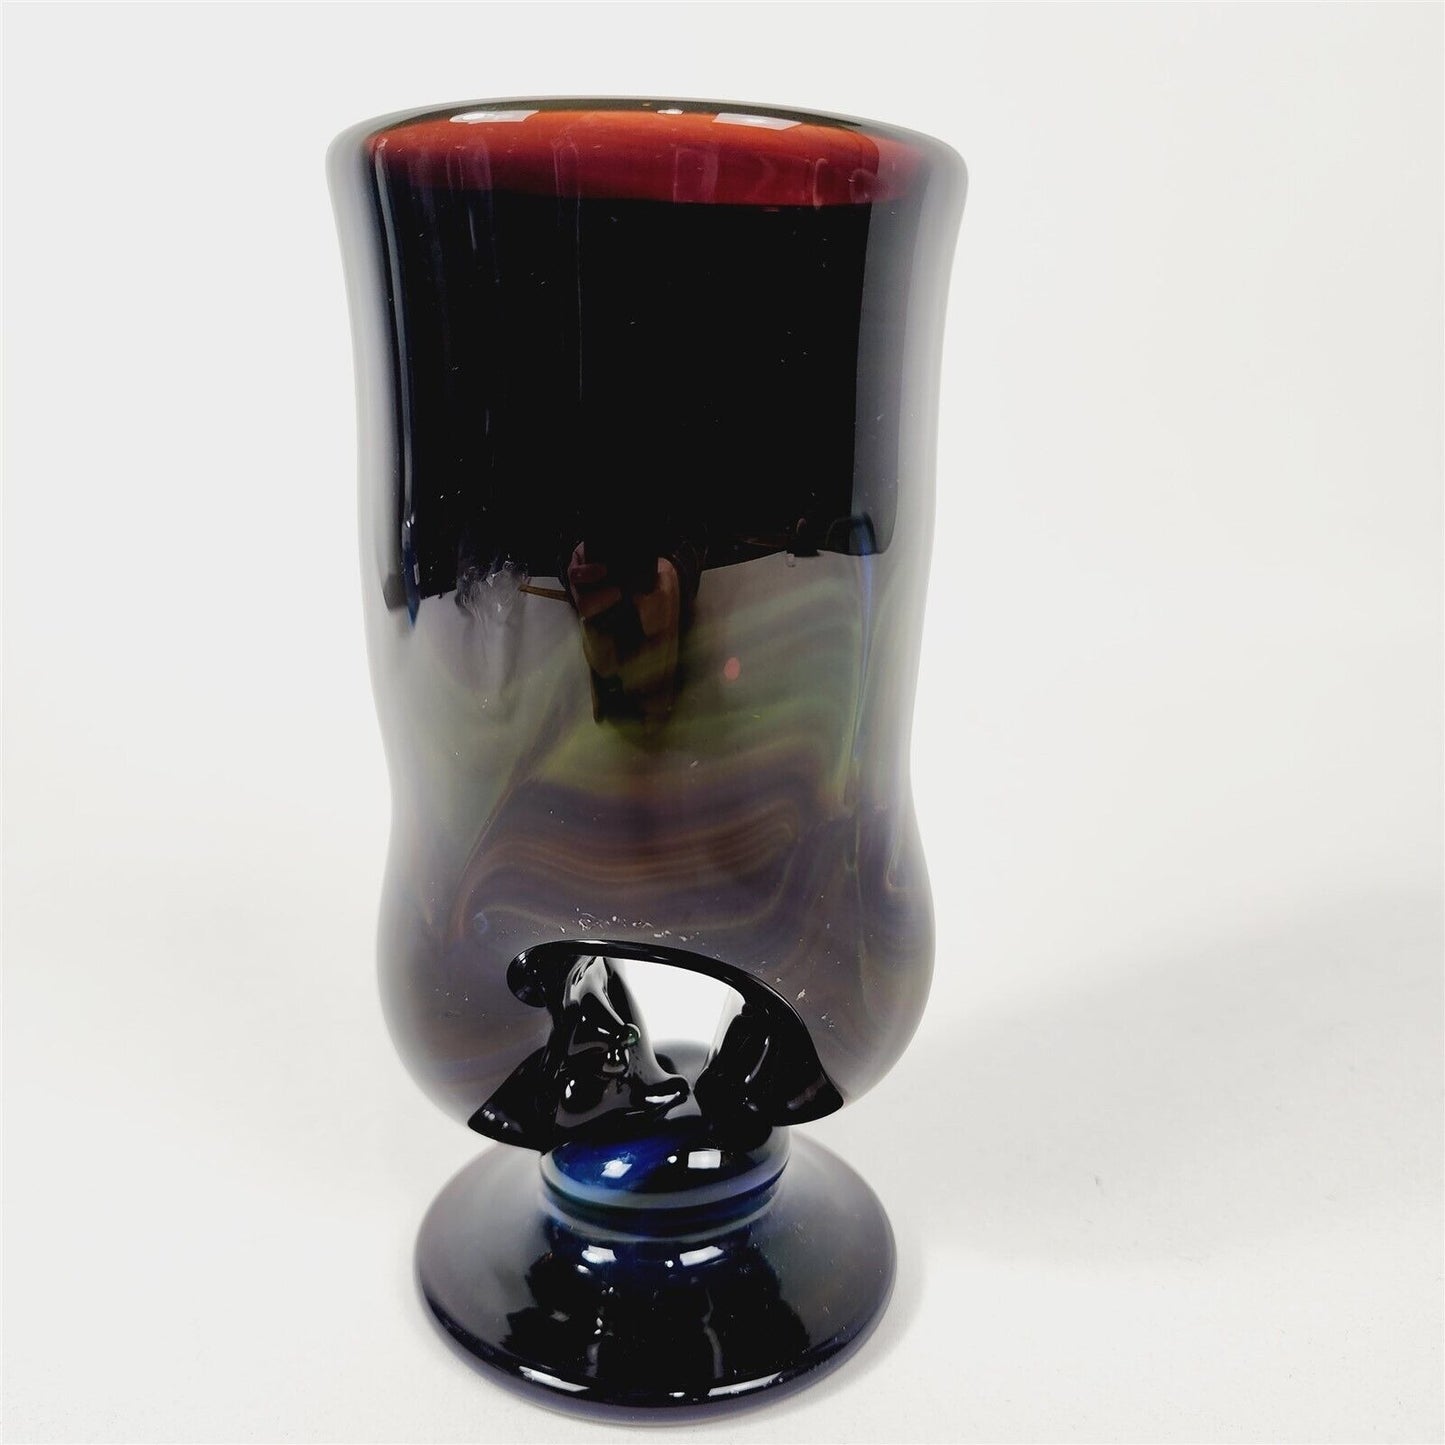 1983 Buzz Williams Art Glass Alder House Oregon Slag Swirl Glass Vase - 6 5/8"